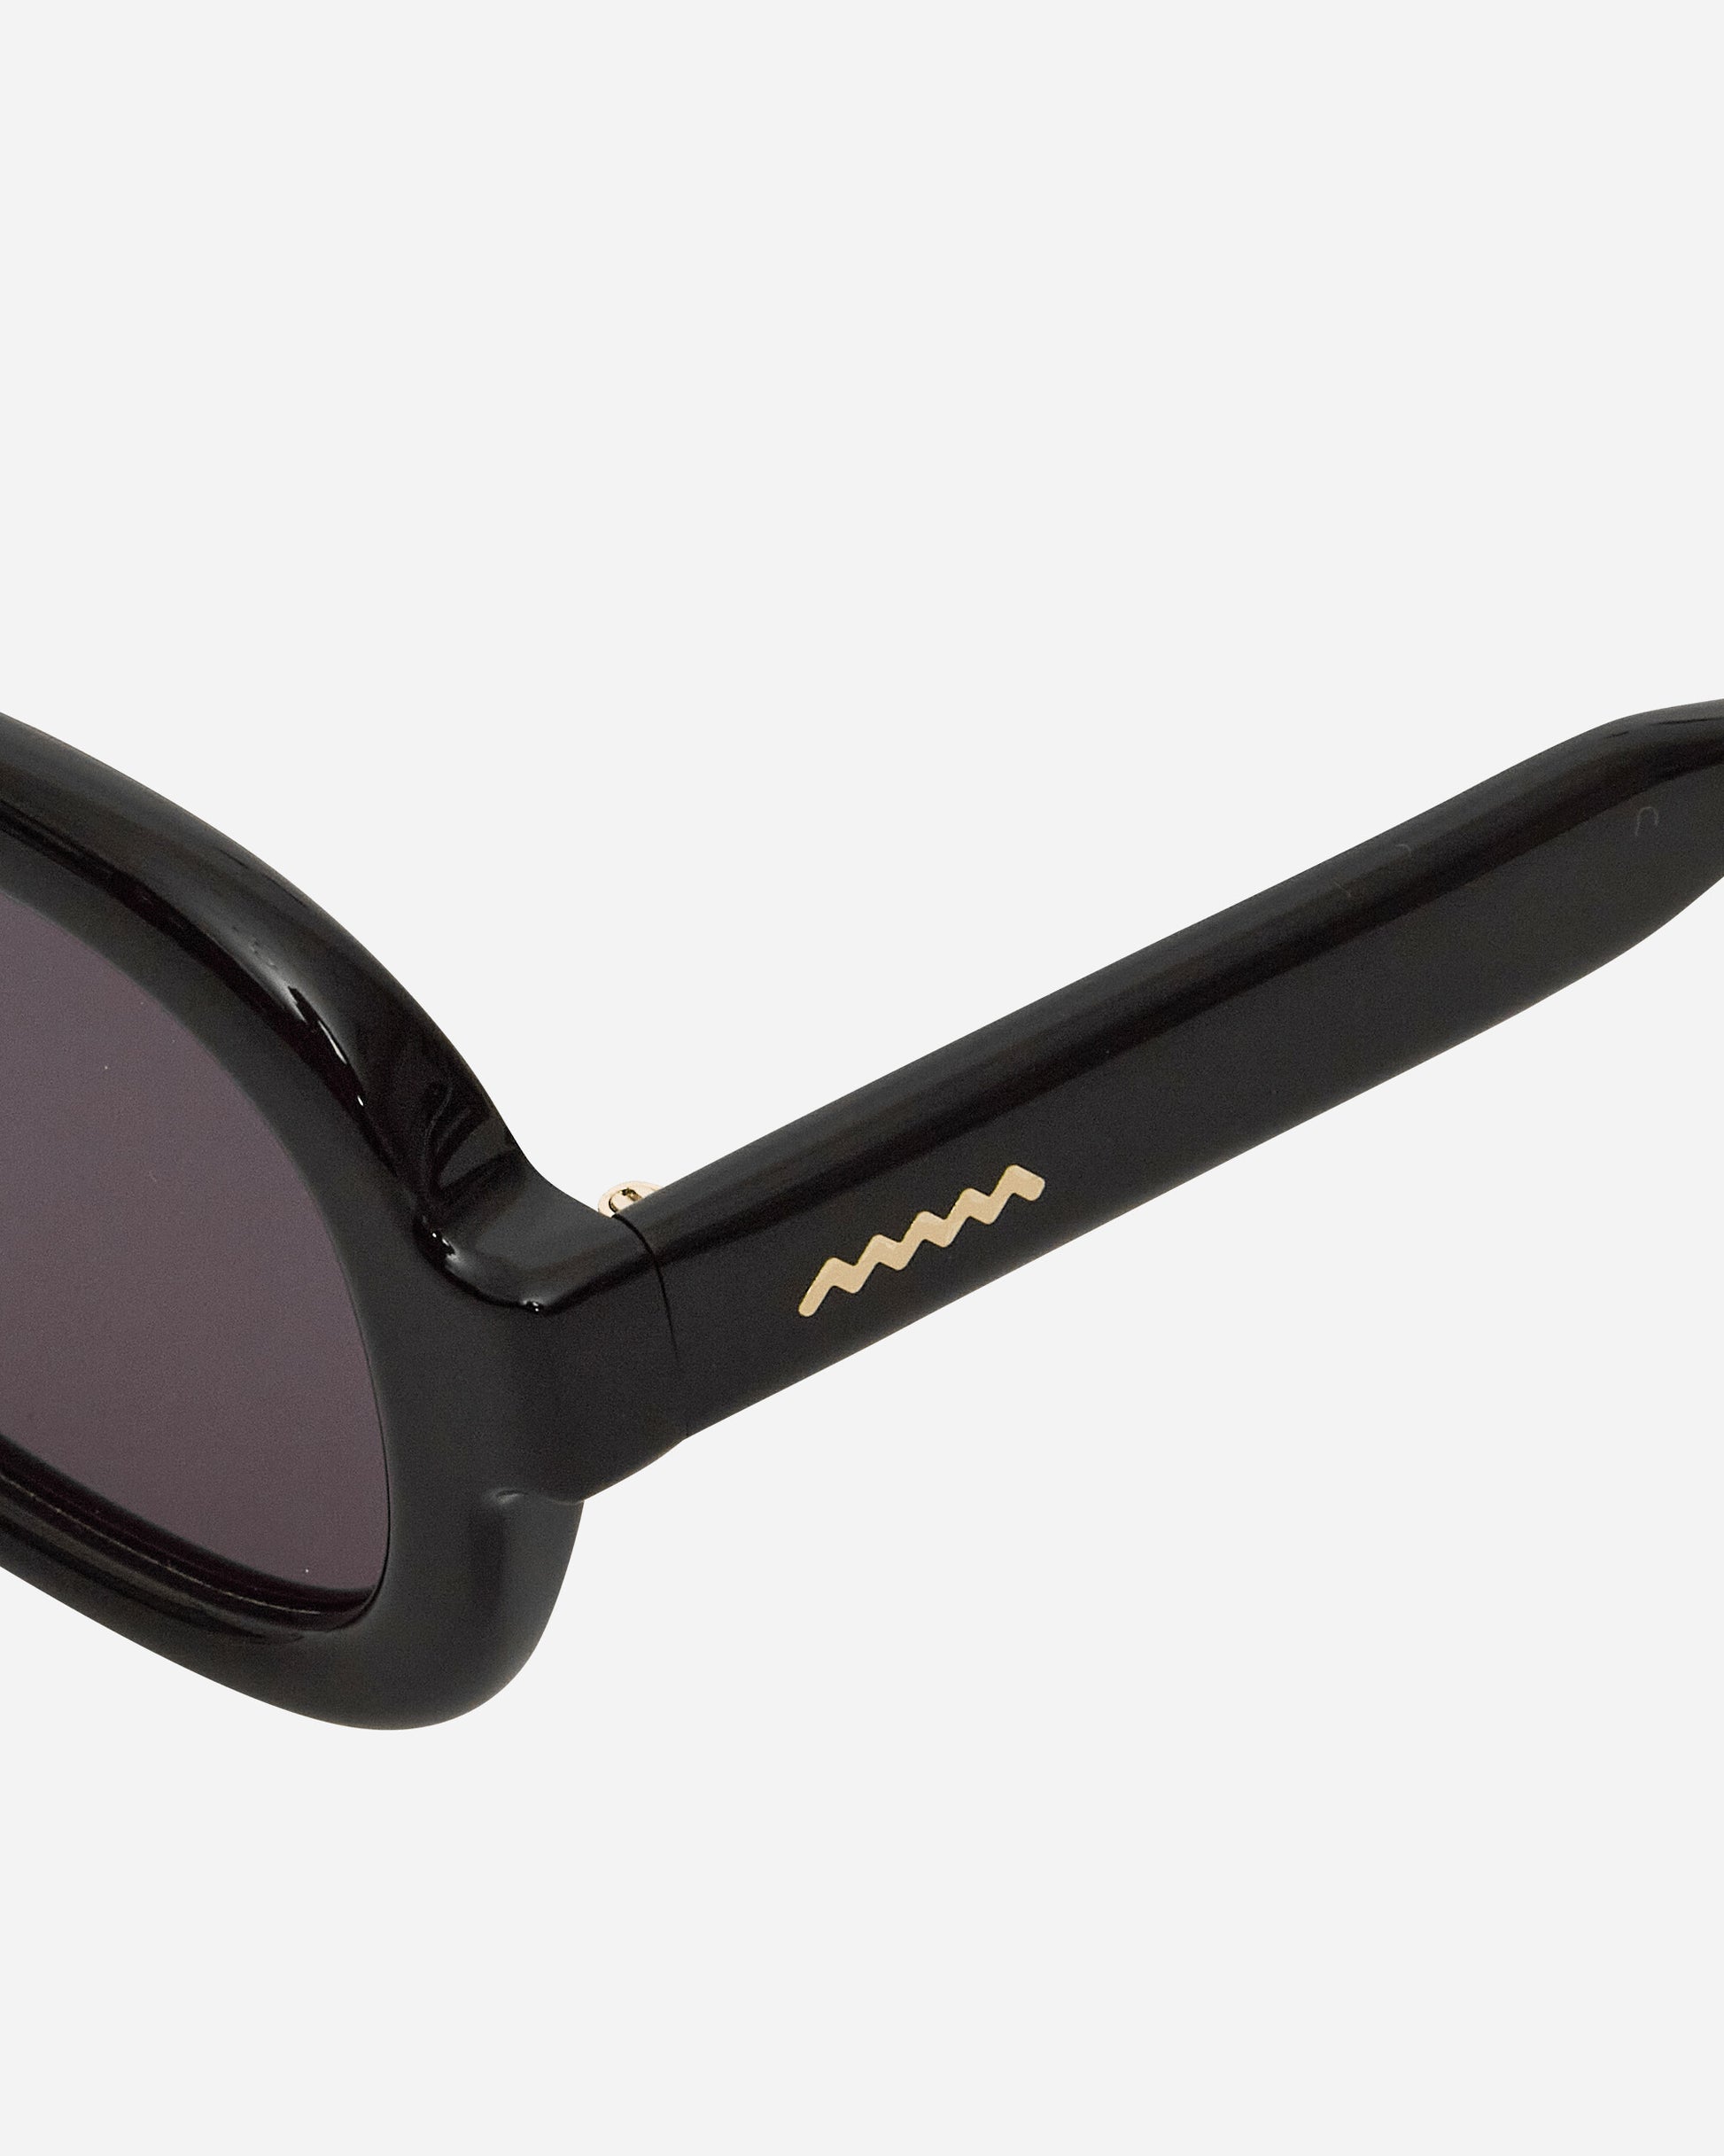 Brain Dead Newman Eye Protection - Black Black Eyewear Sunglasses A08003848BK BLACK